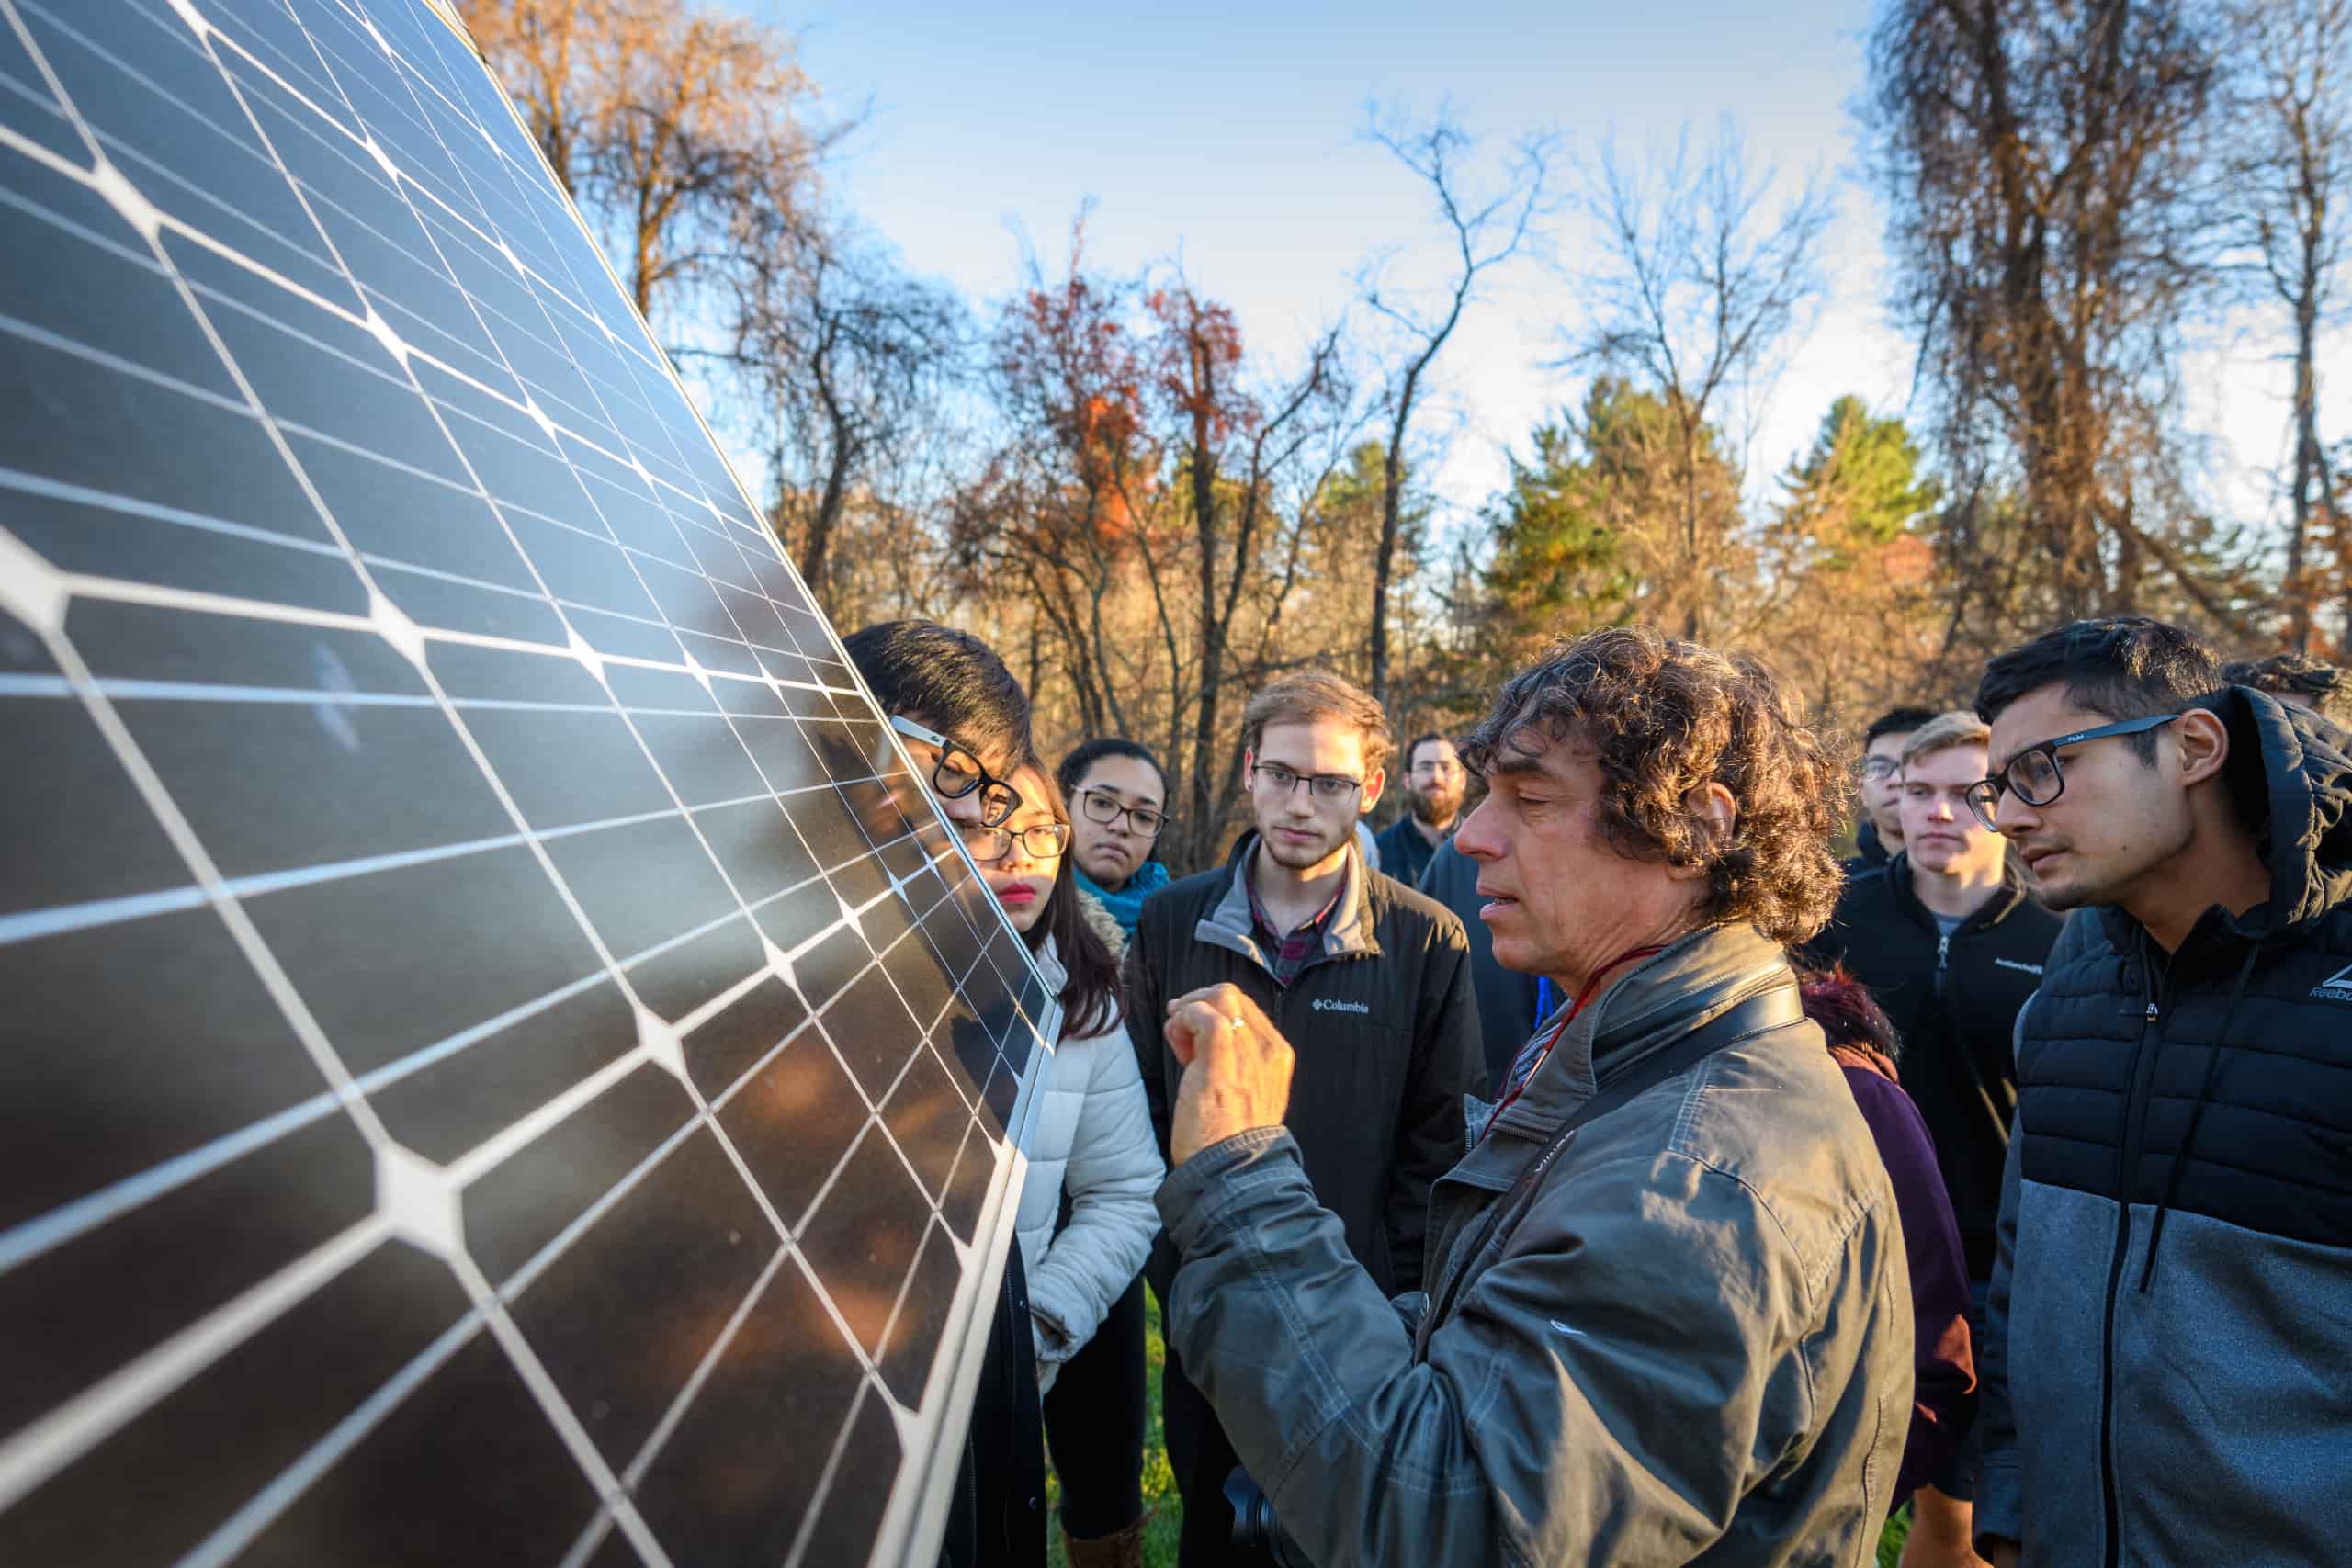 A class gathers around solar panels